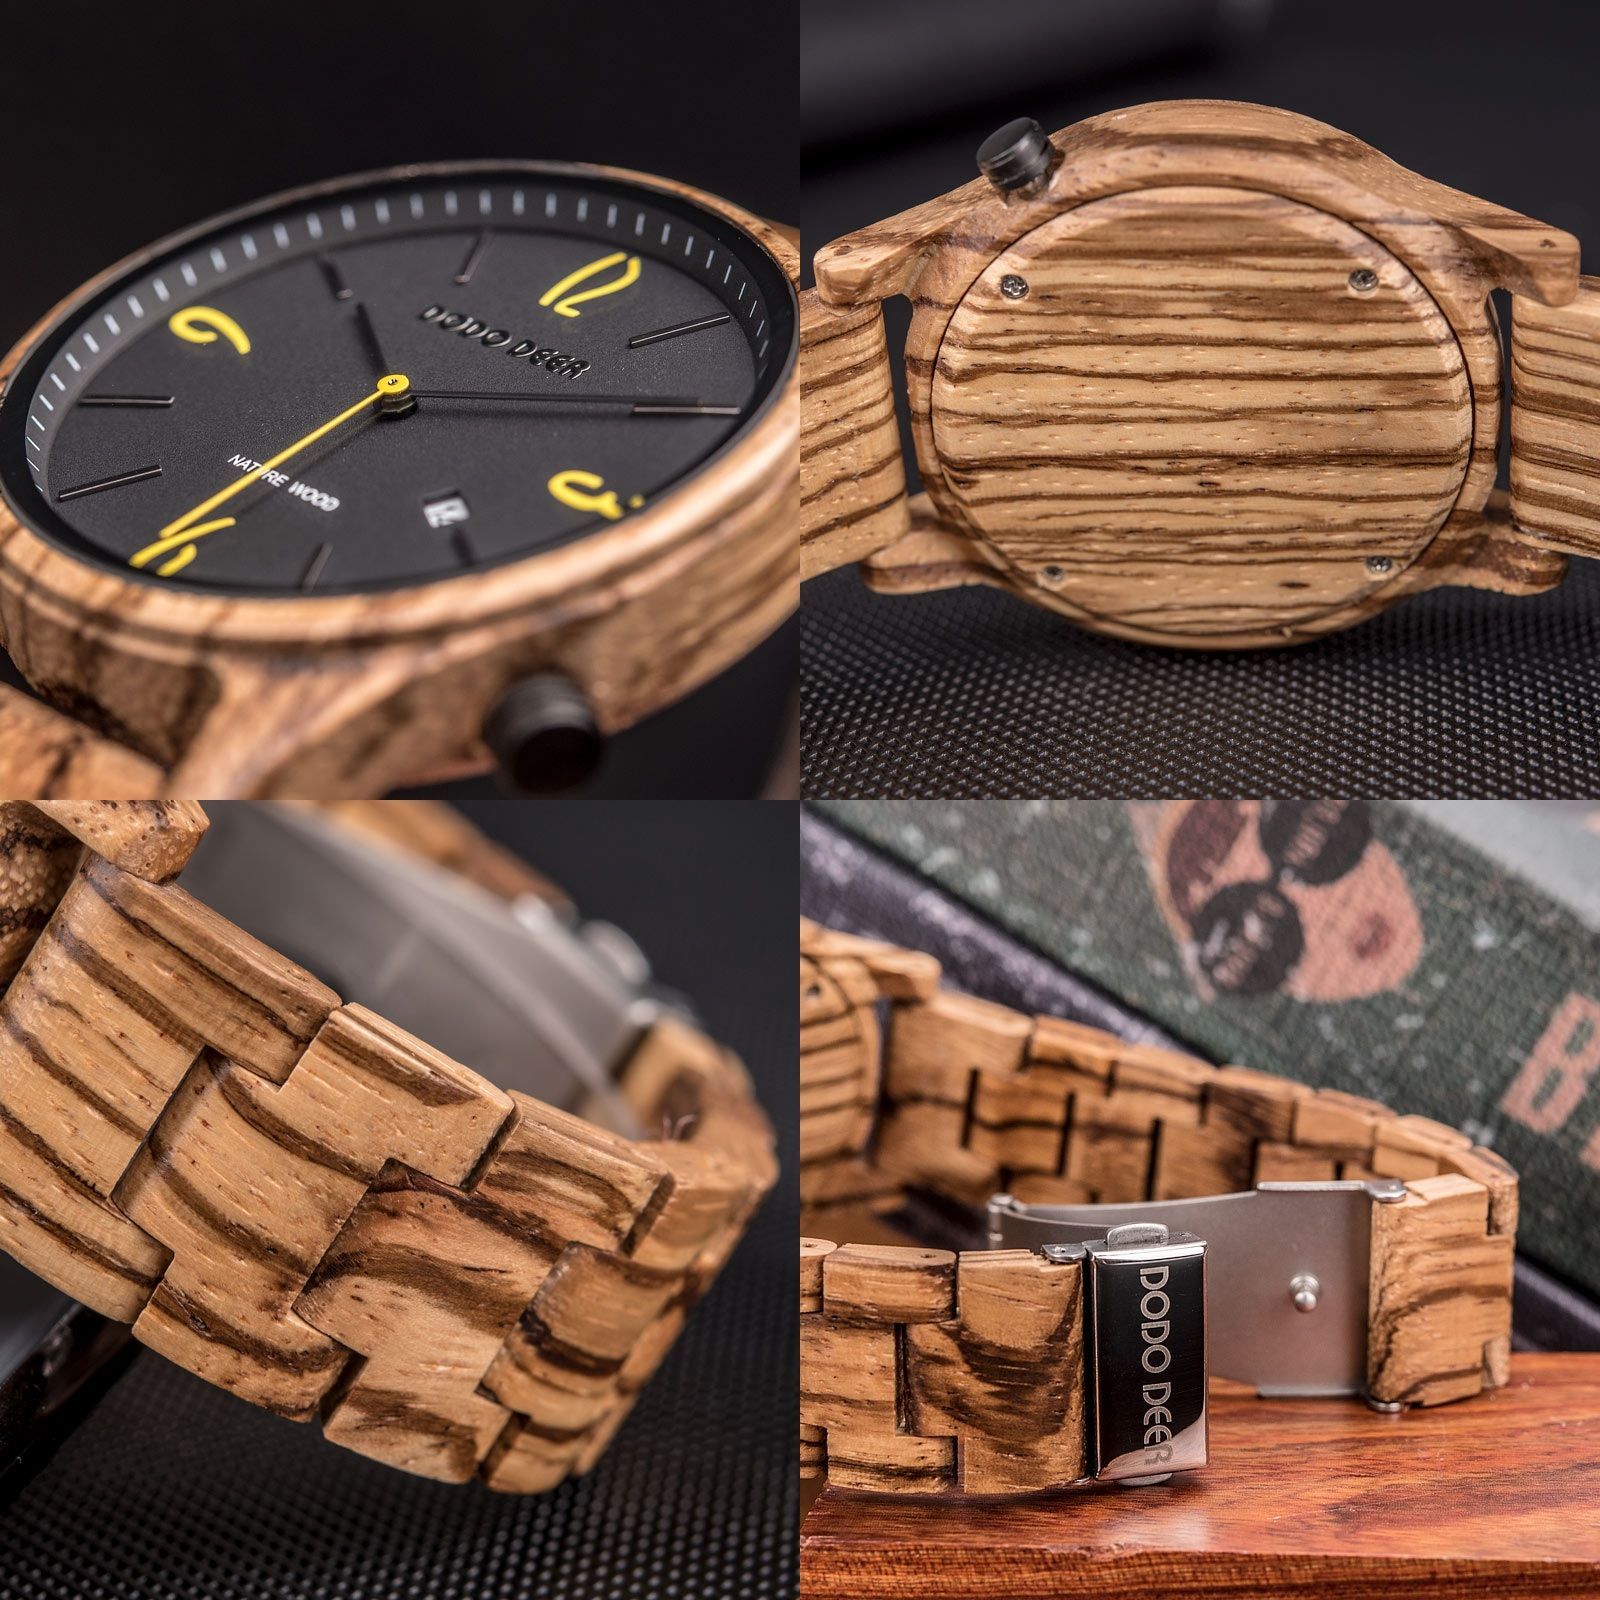 DODO DEER 木製腕時計 日本製クォーツ アナログ ペアウォッチ メンズ